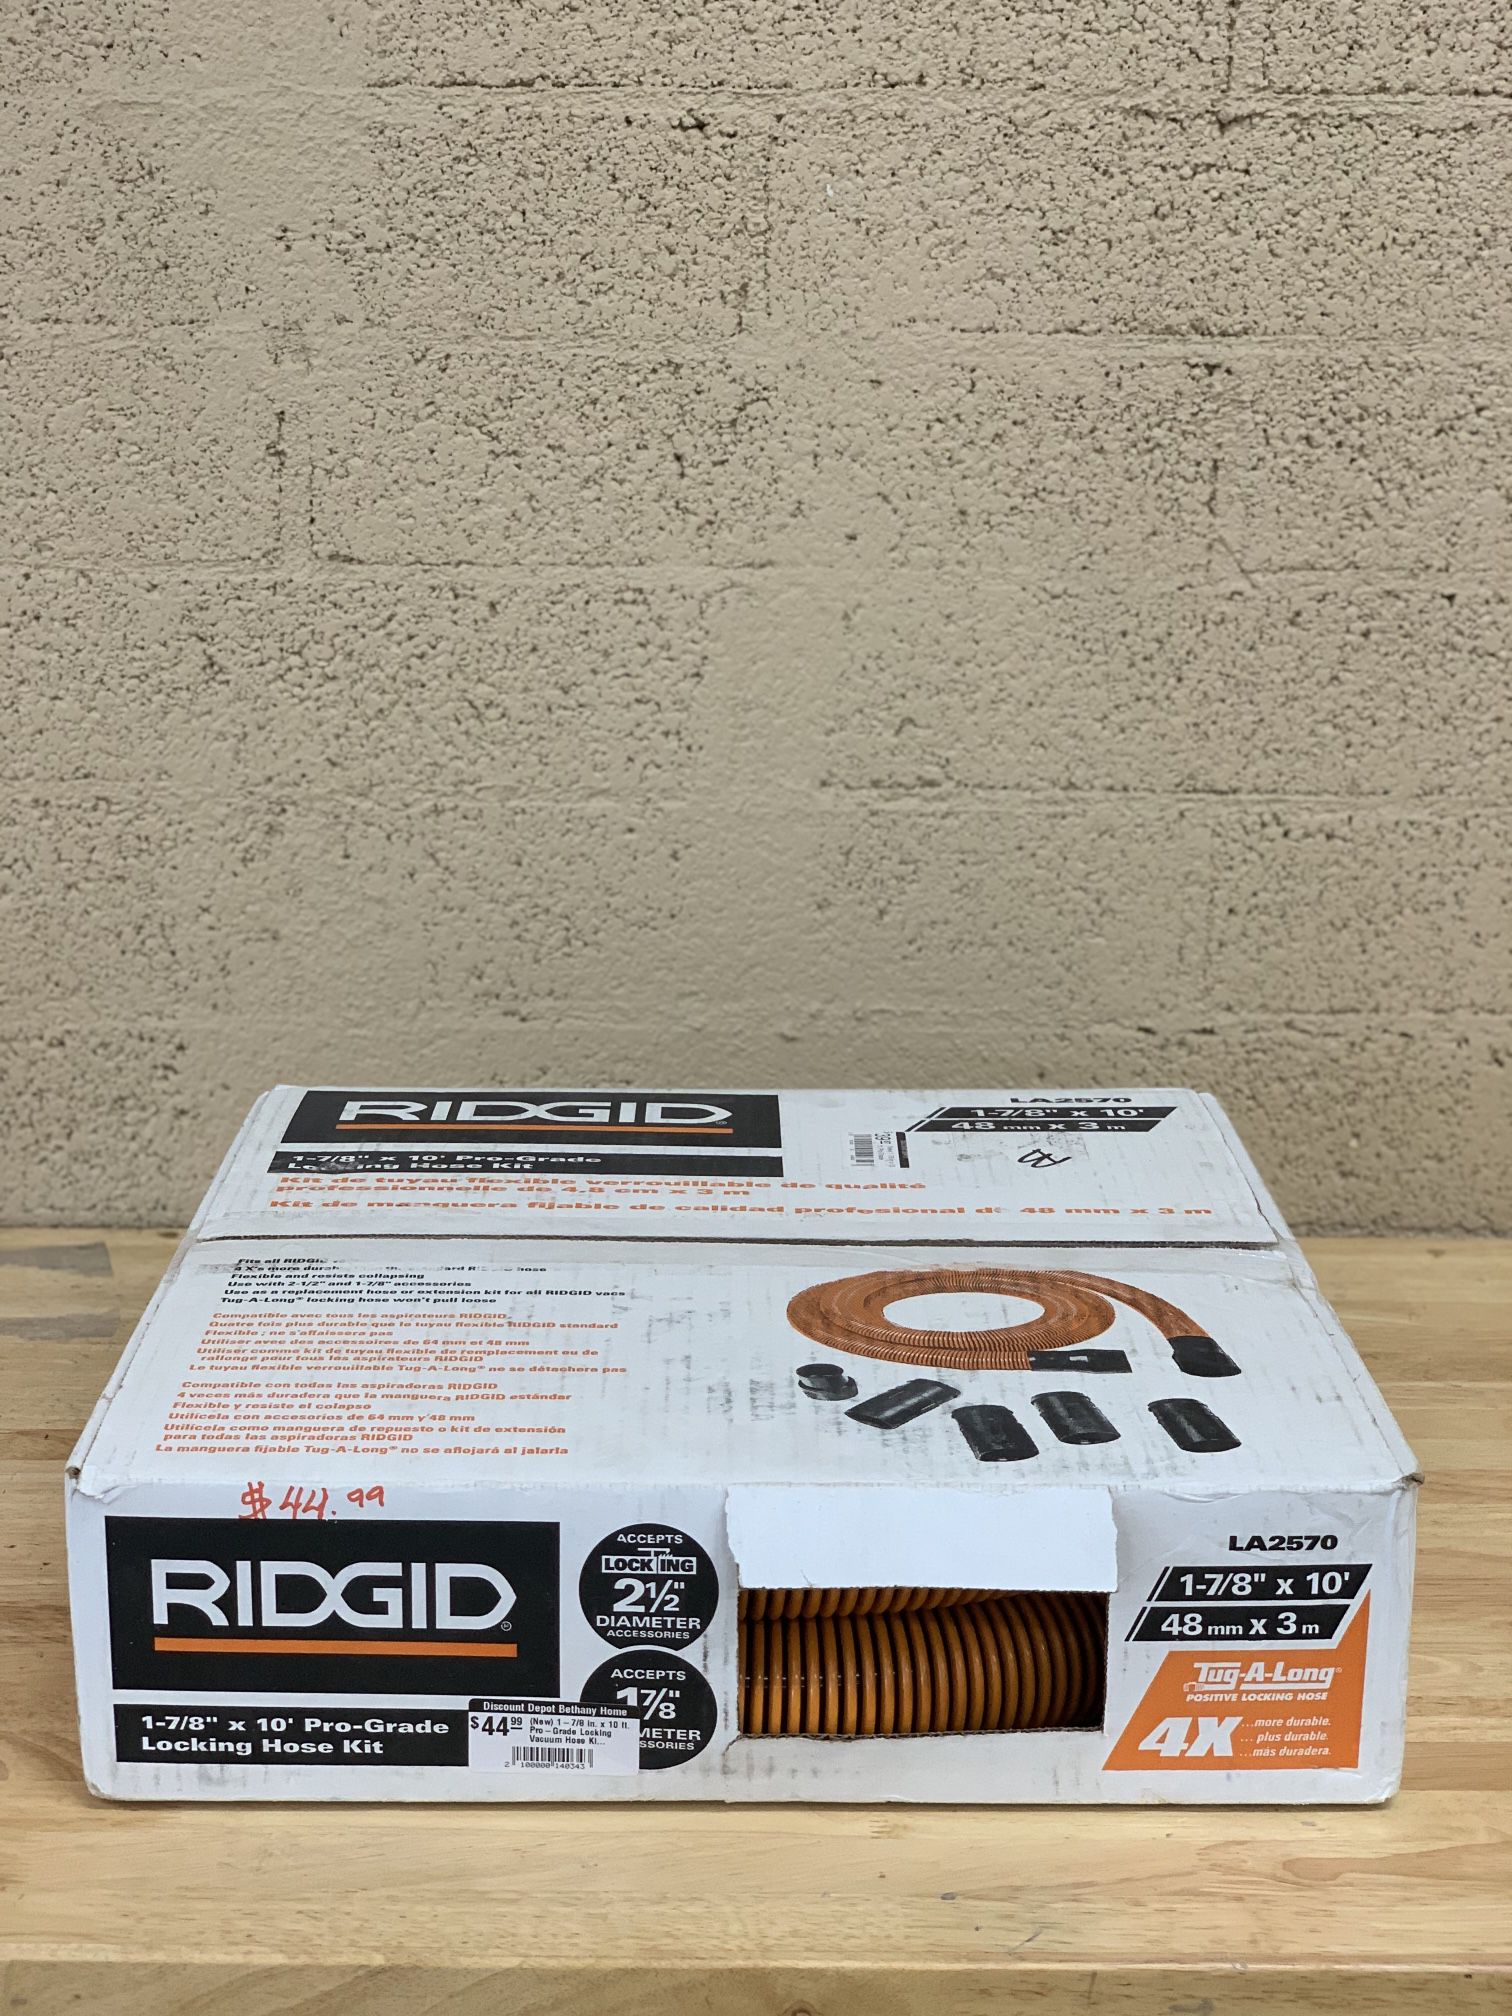 1-7/8 In. X 10 Ft. Pro-Grade Locking Vacuum Hose Kit For RIDGID